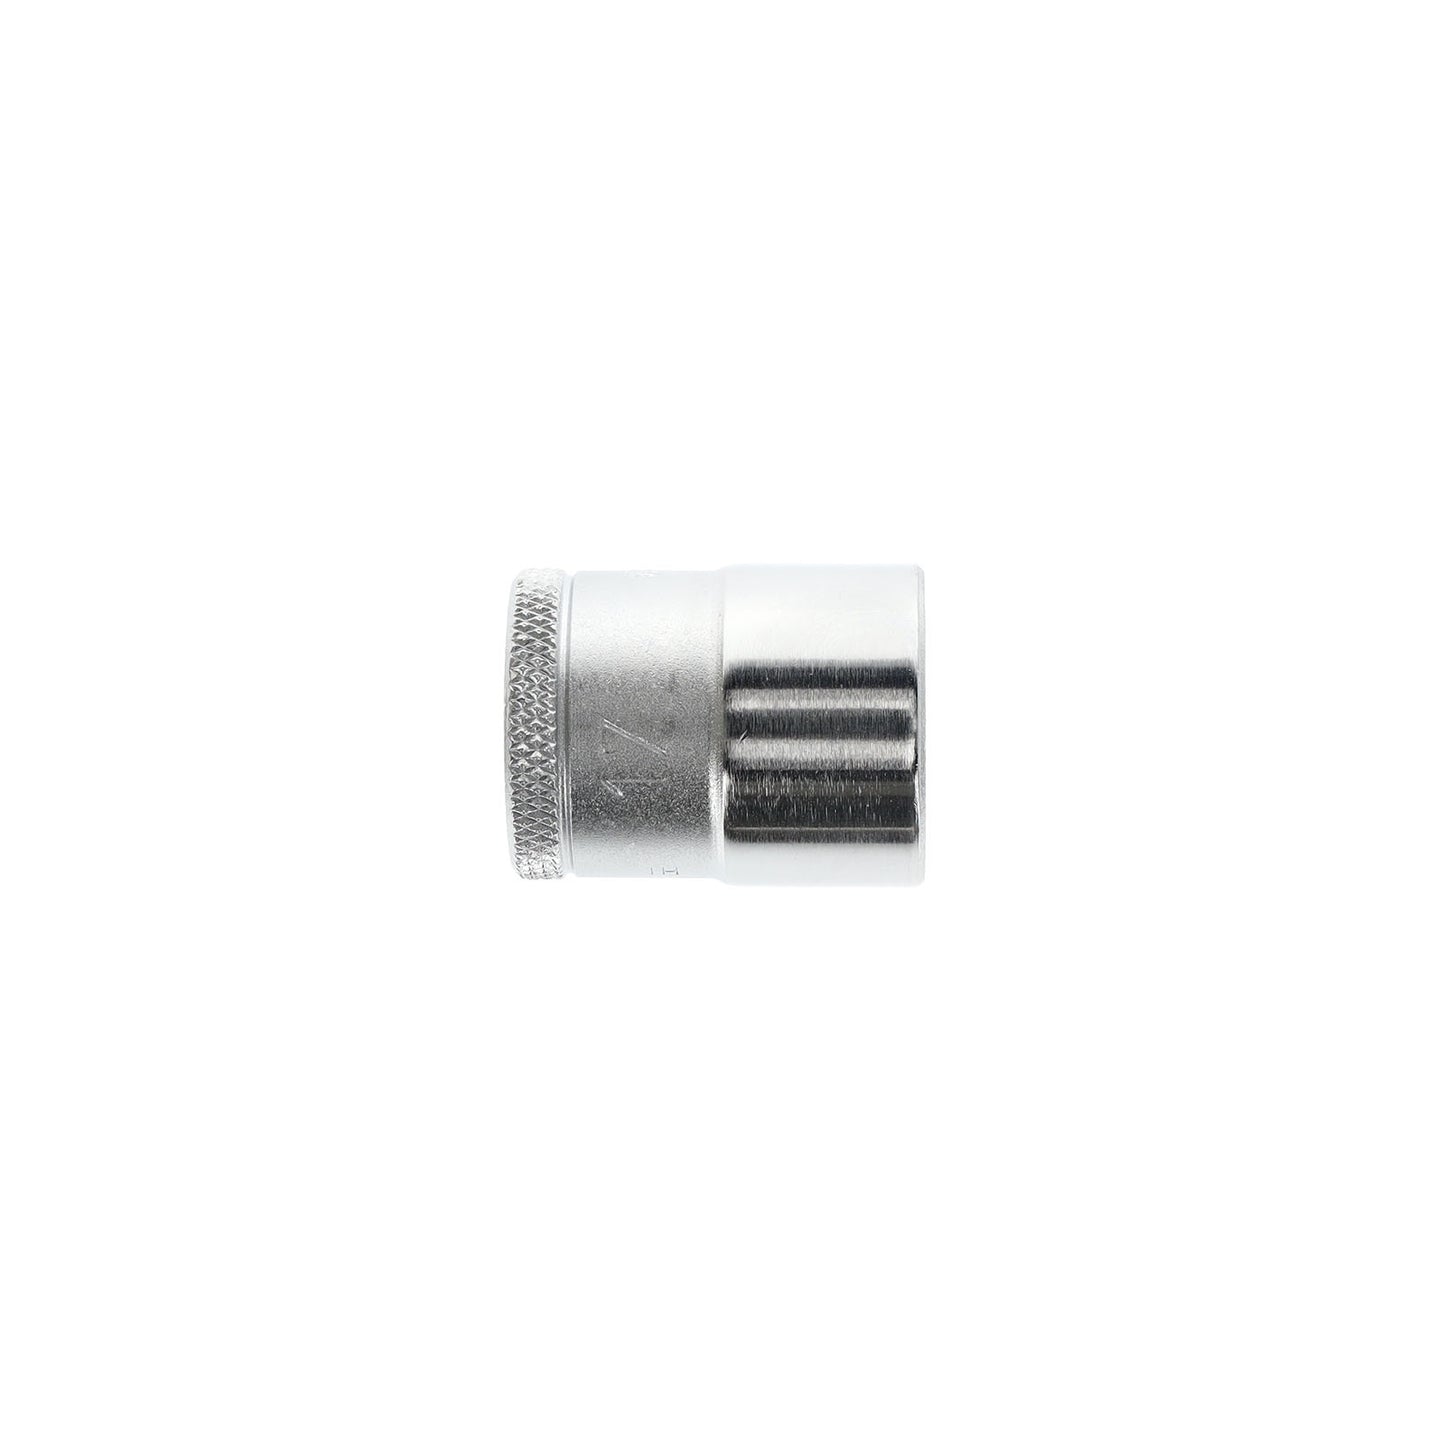 GEDORE 30 17 - Hexagonal Socket 3/8", 17 mm (6234580)